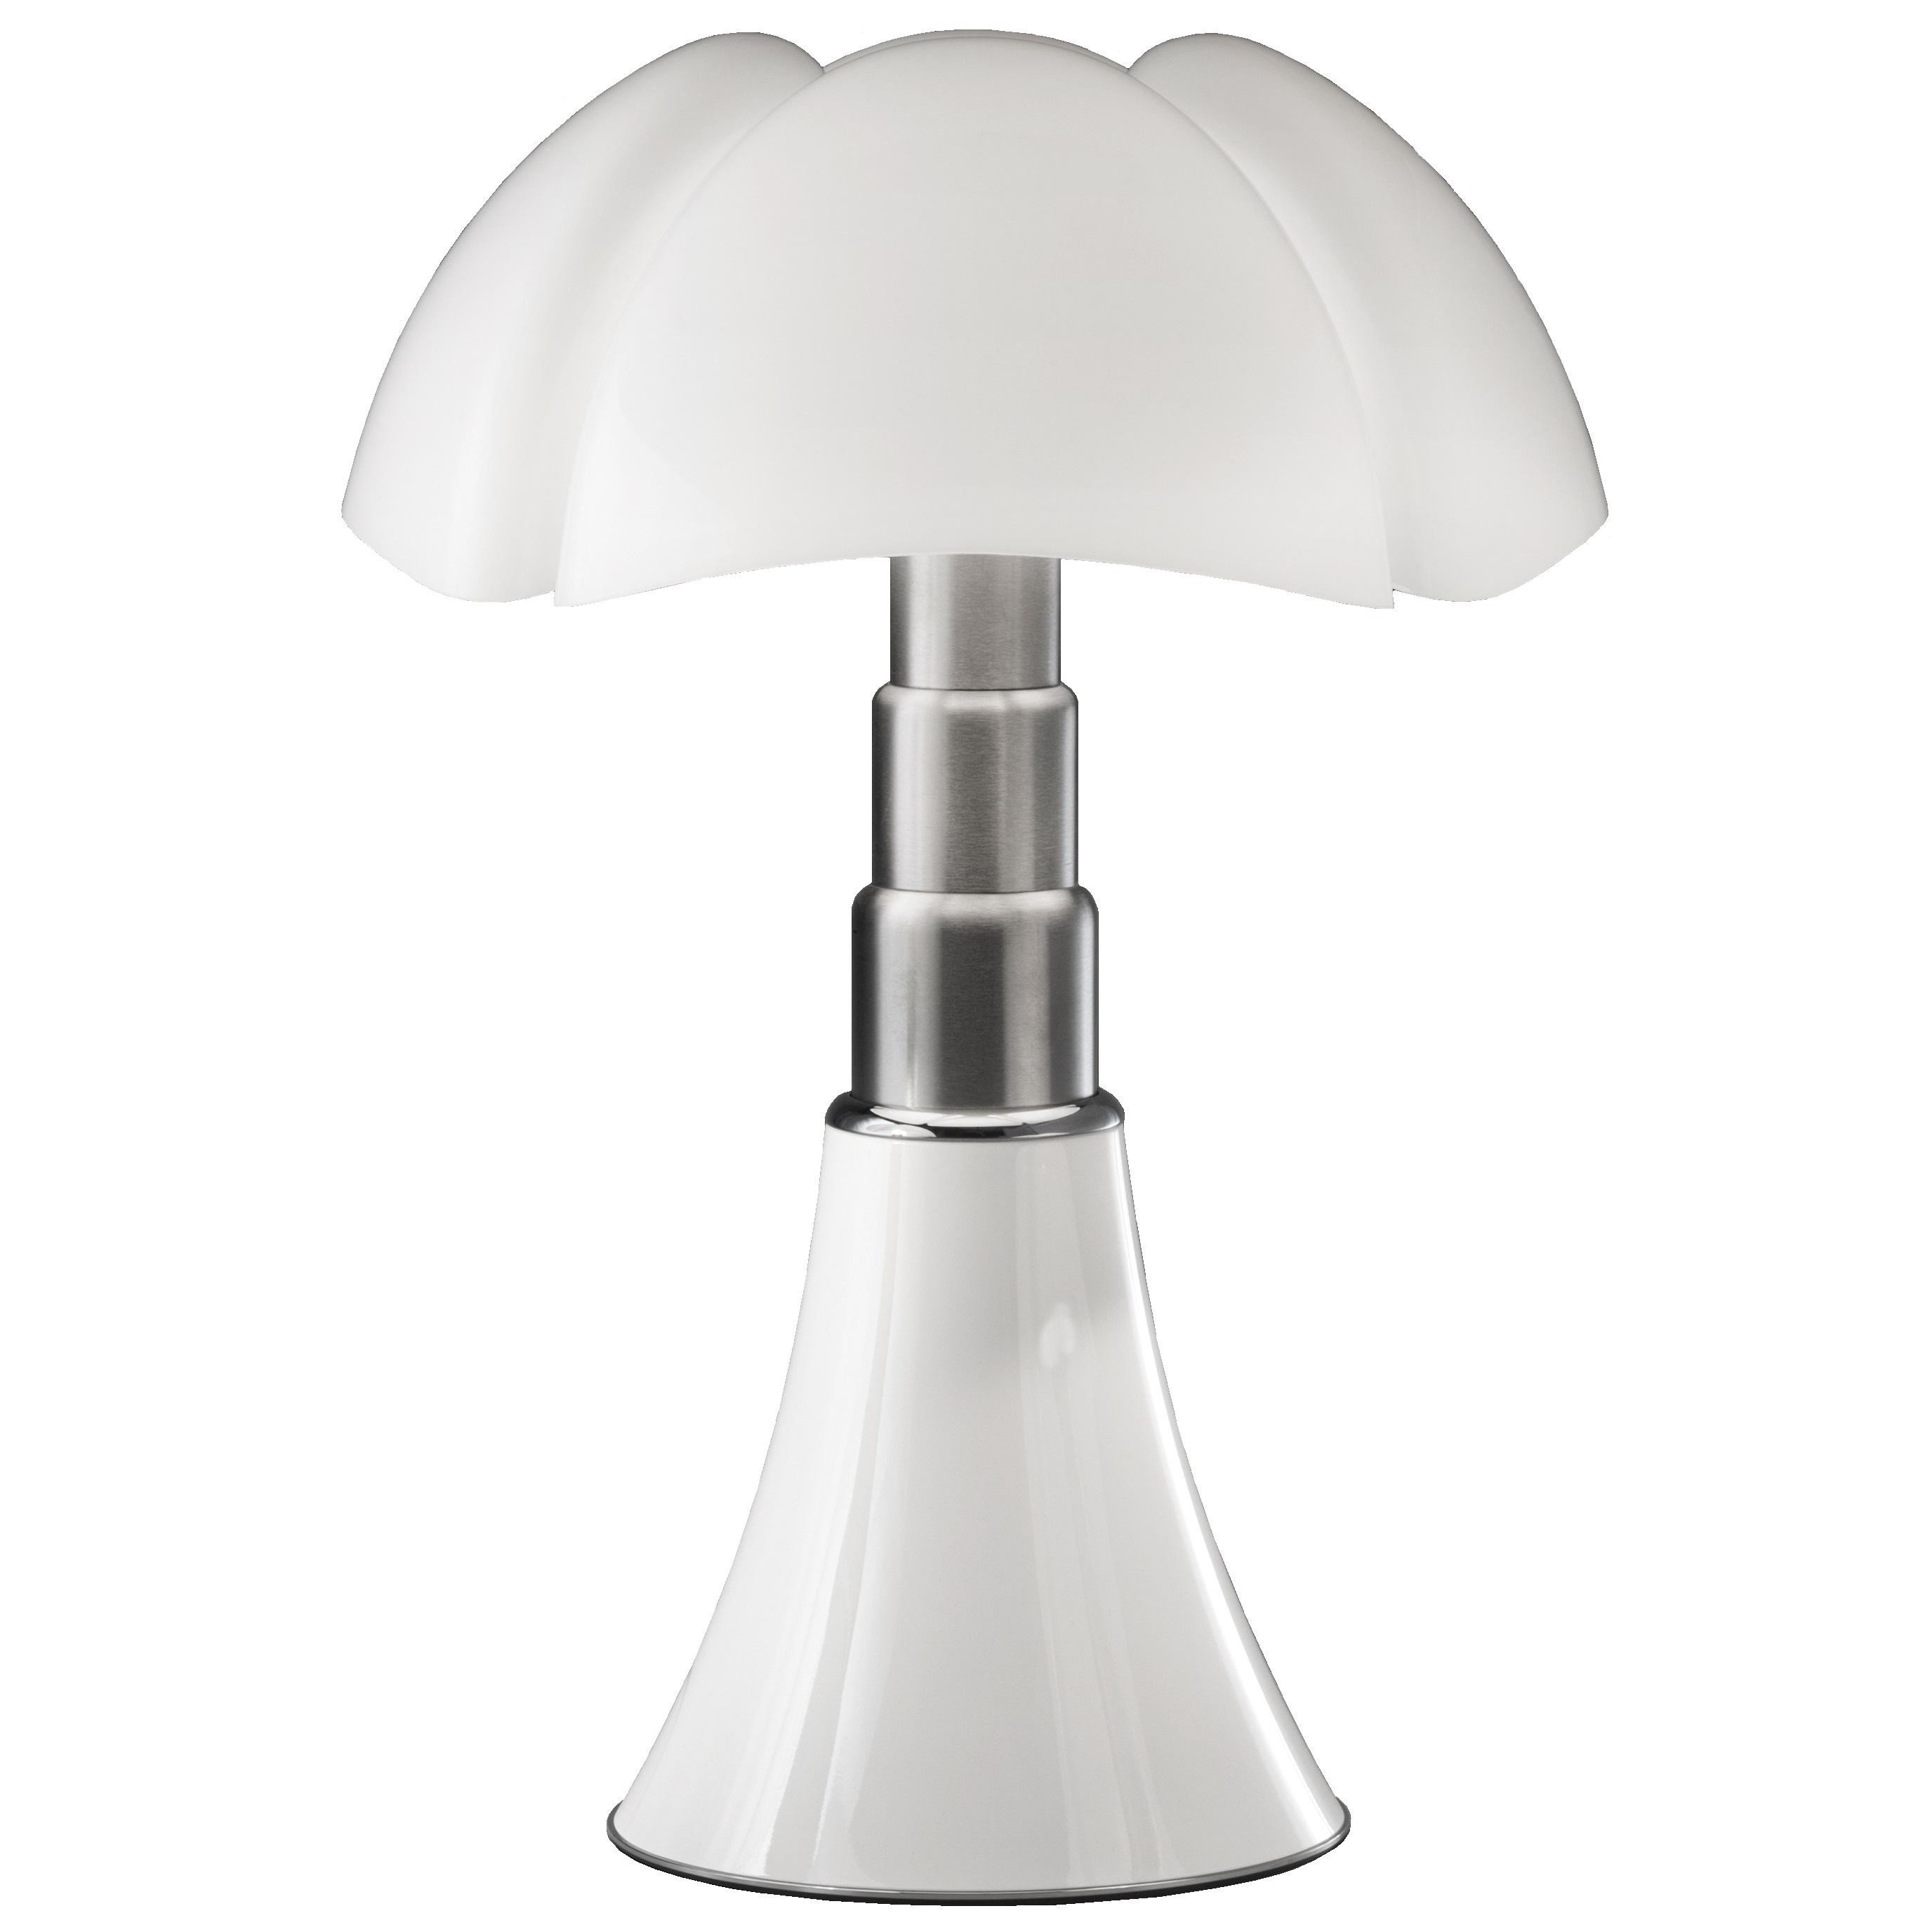 Martinelli Luce Pipistrello vloer- en tafellamp LED wit | Flinders